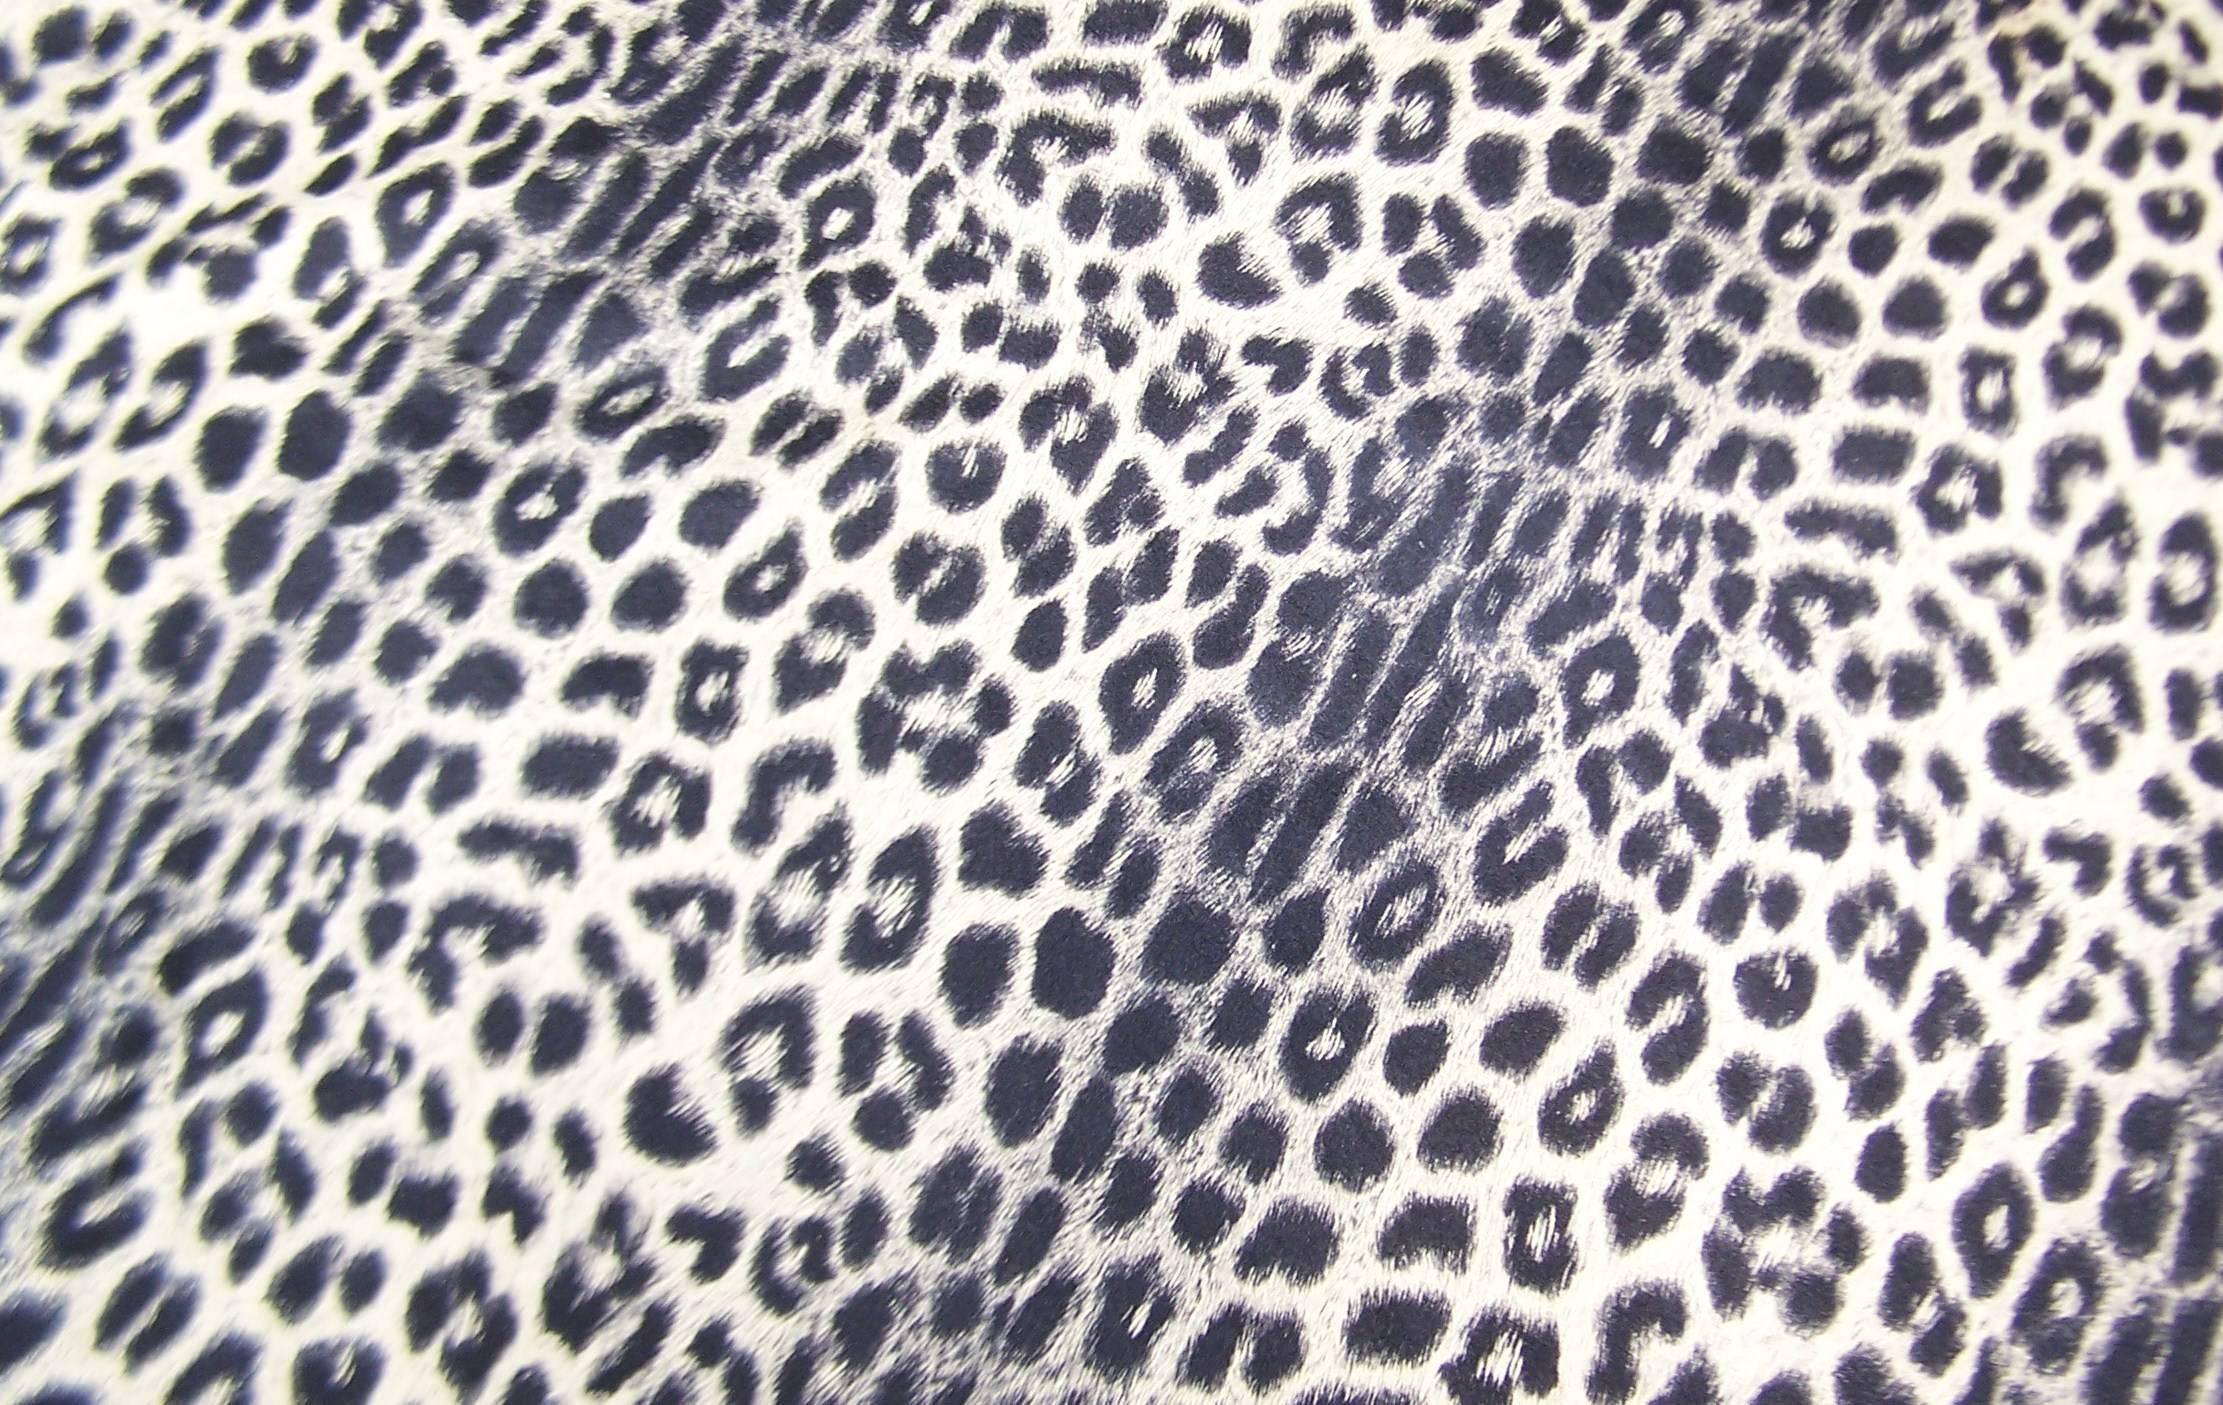 Purrrfect 1950's Leopard Print Circle Skirt 1